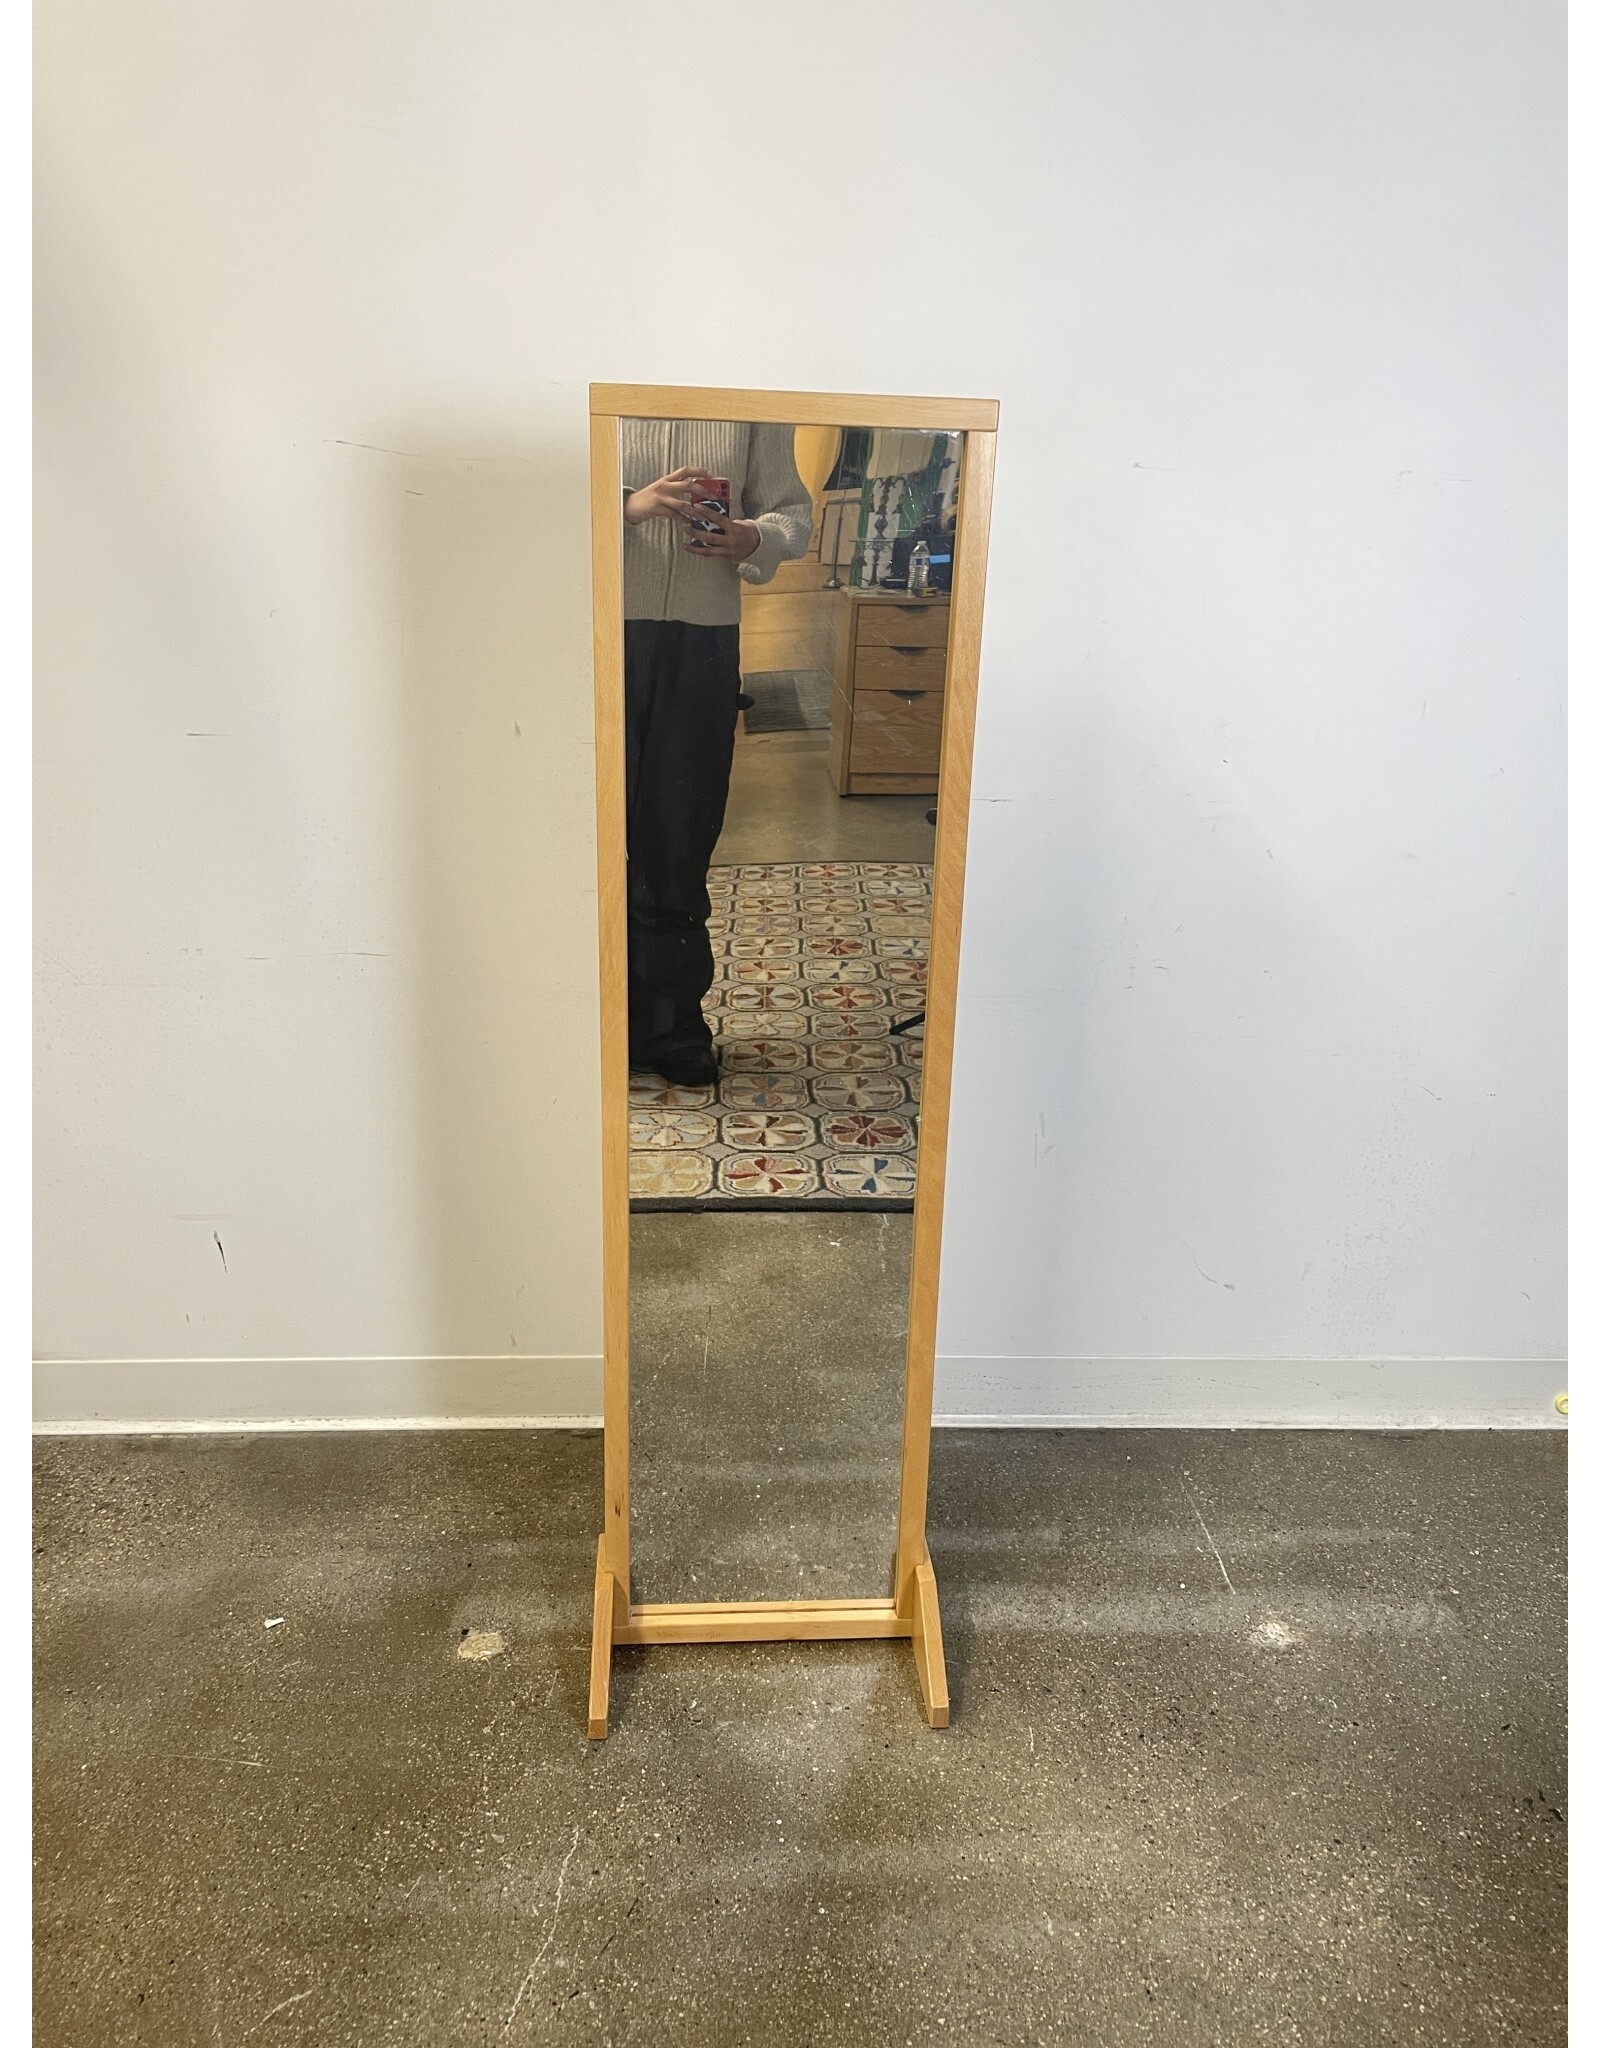 ENVIRONMENTS Standing Acrylic Mirror